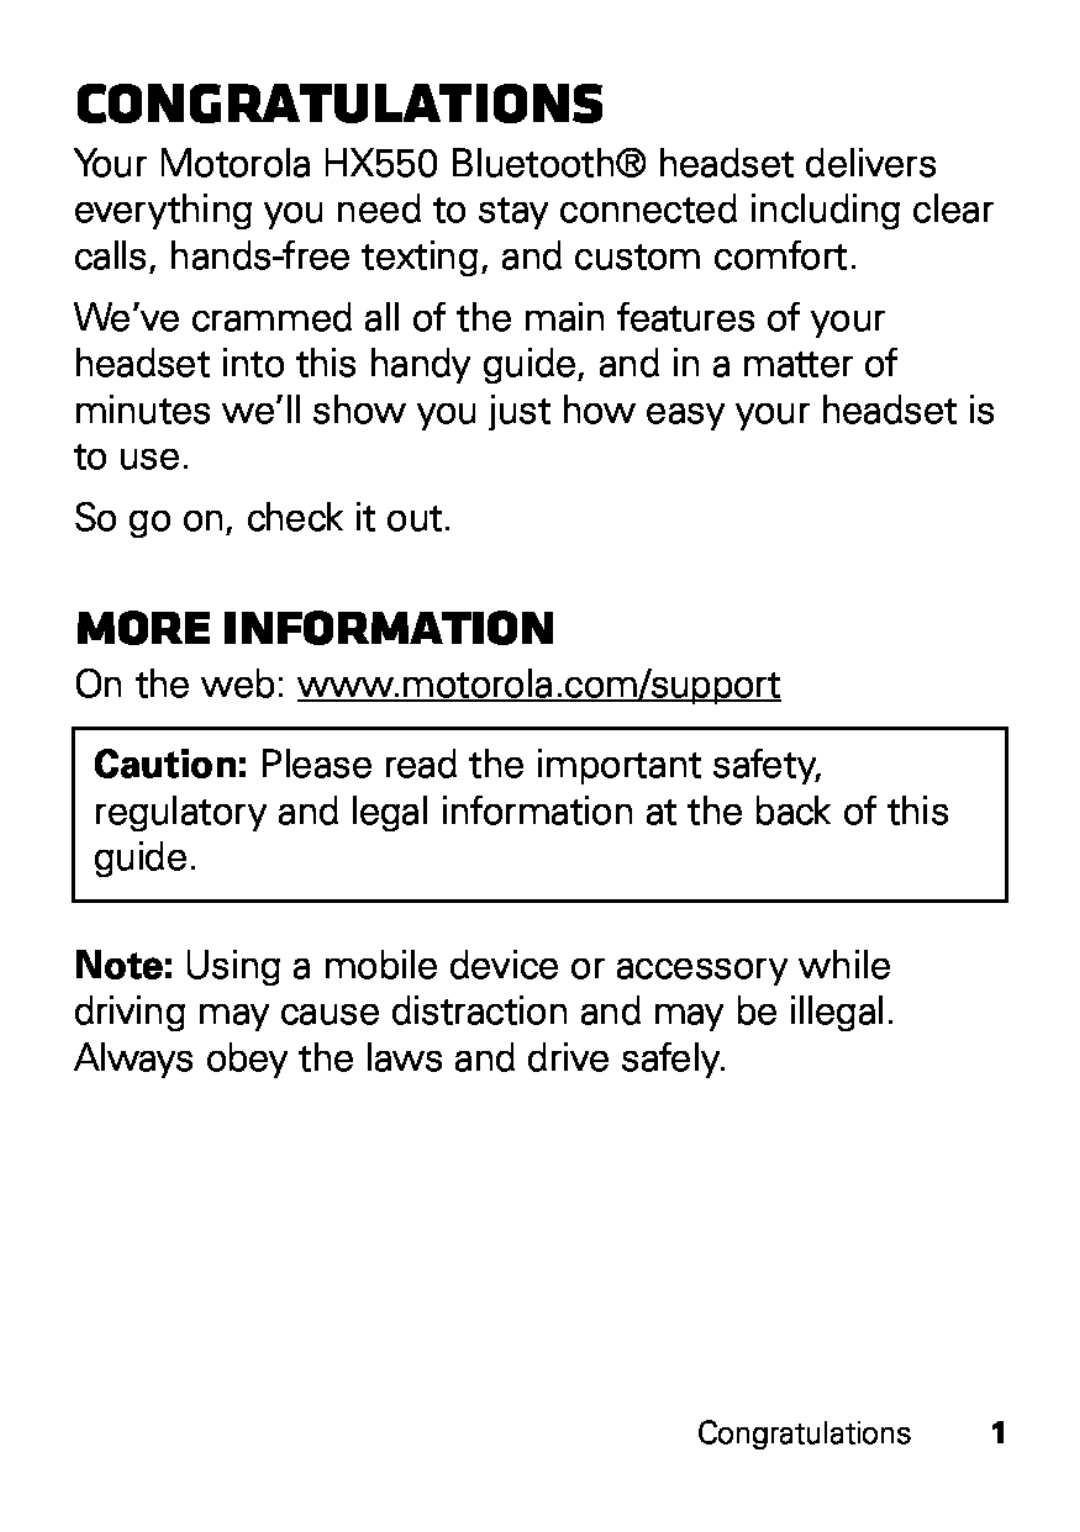 Motorola HX550 manual Congratulations, more information 